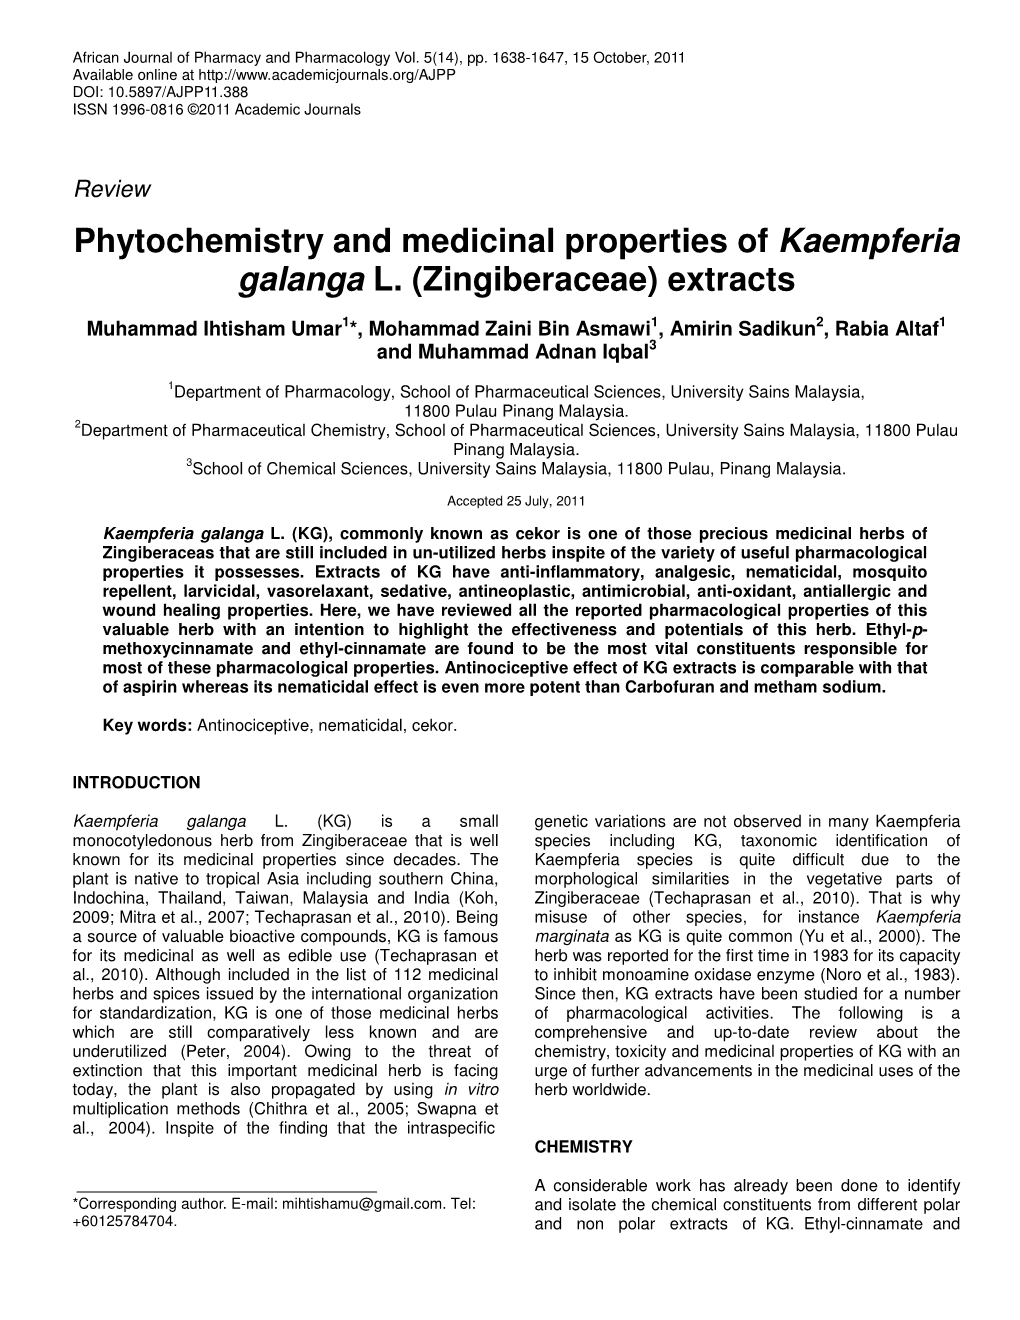 Phytochemistry and Medicinal Properties of Kaempferia Galanga L